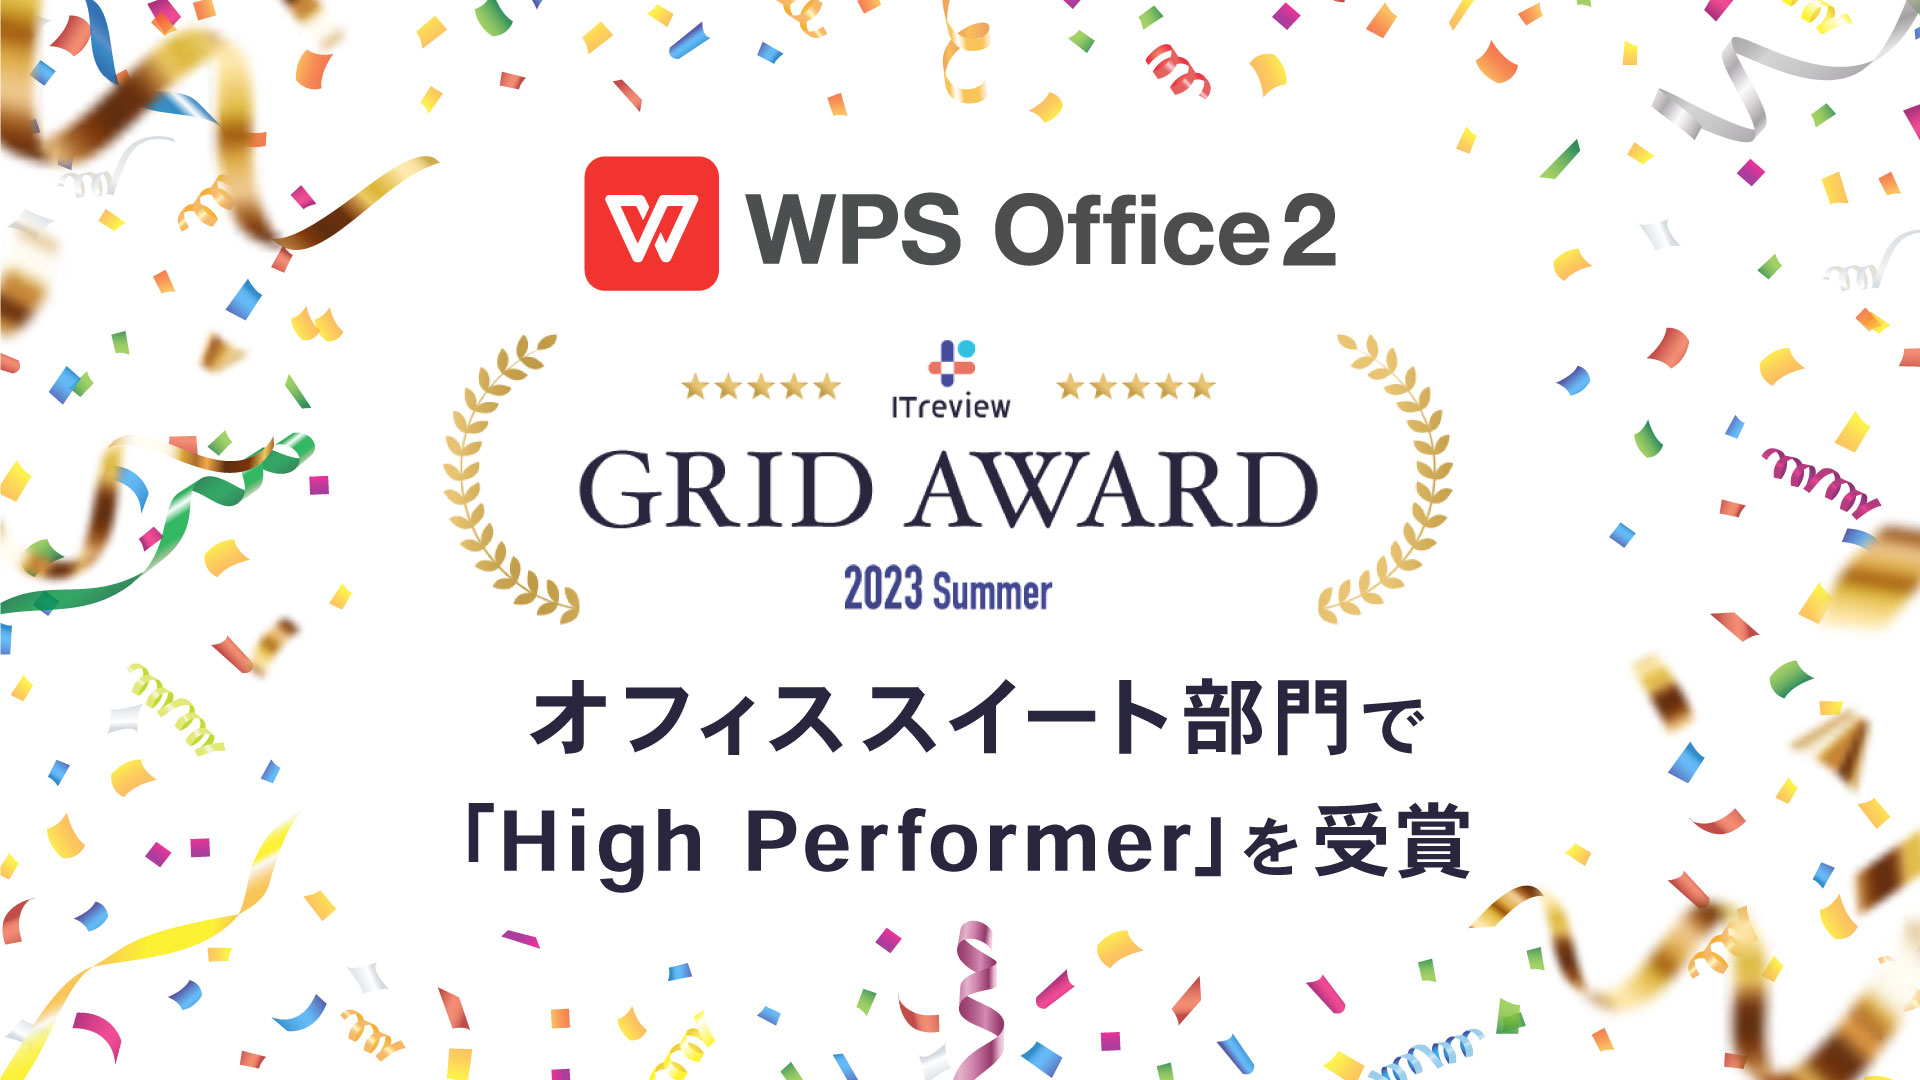 WPS Office、「ITreview Grid Award 2023 Summer」オフィススイート部門で「High Performer」を受賞